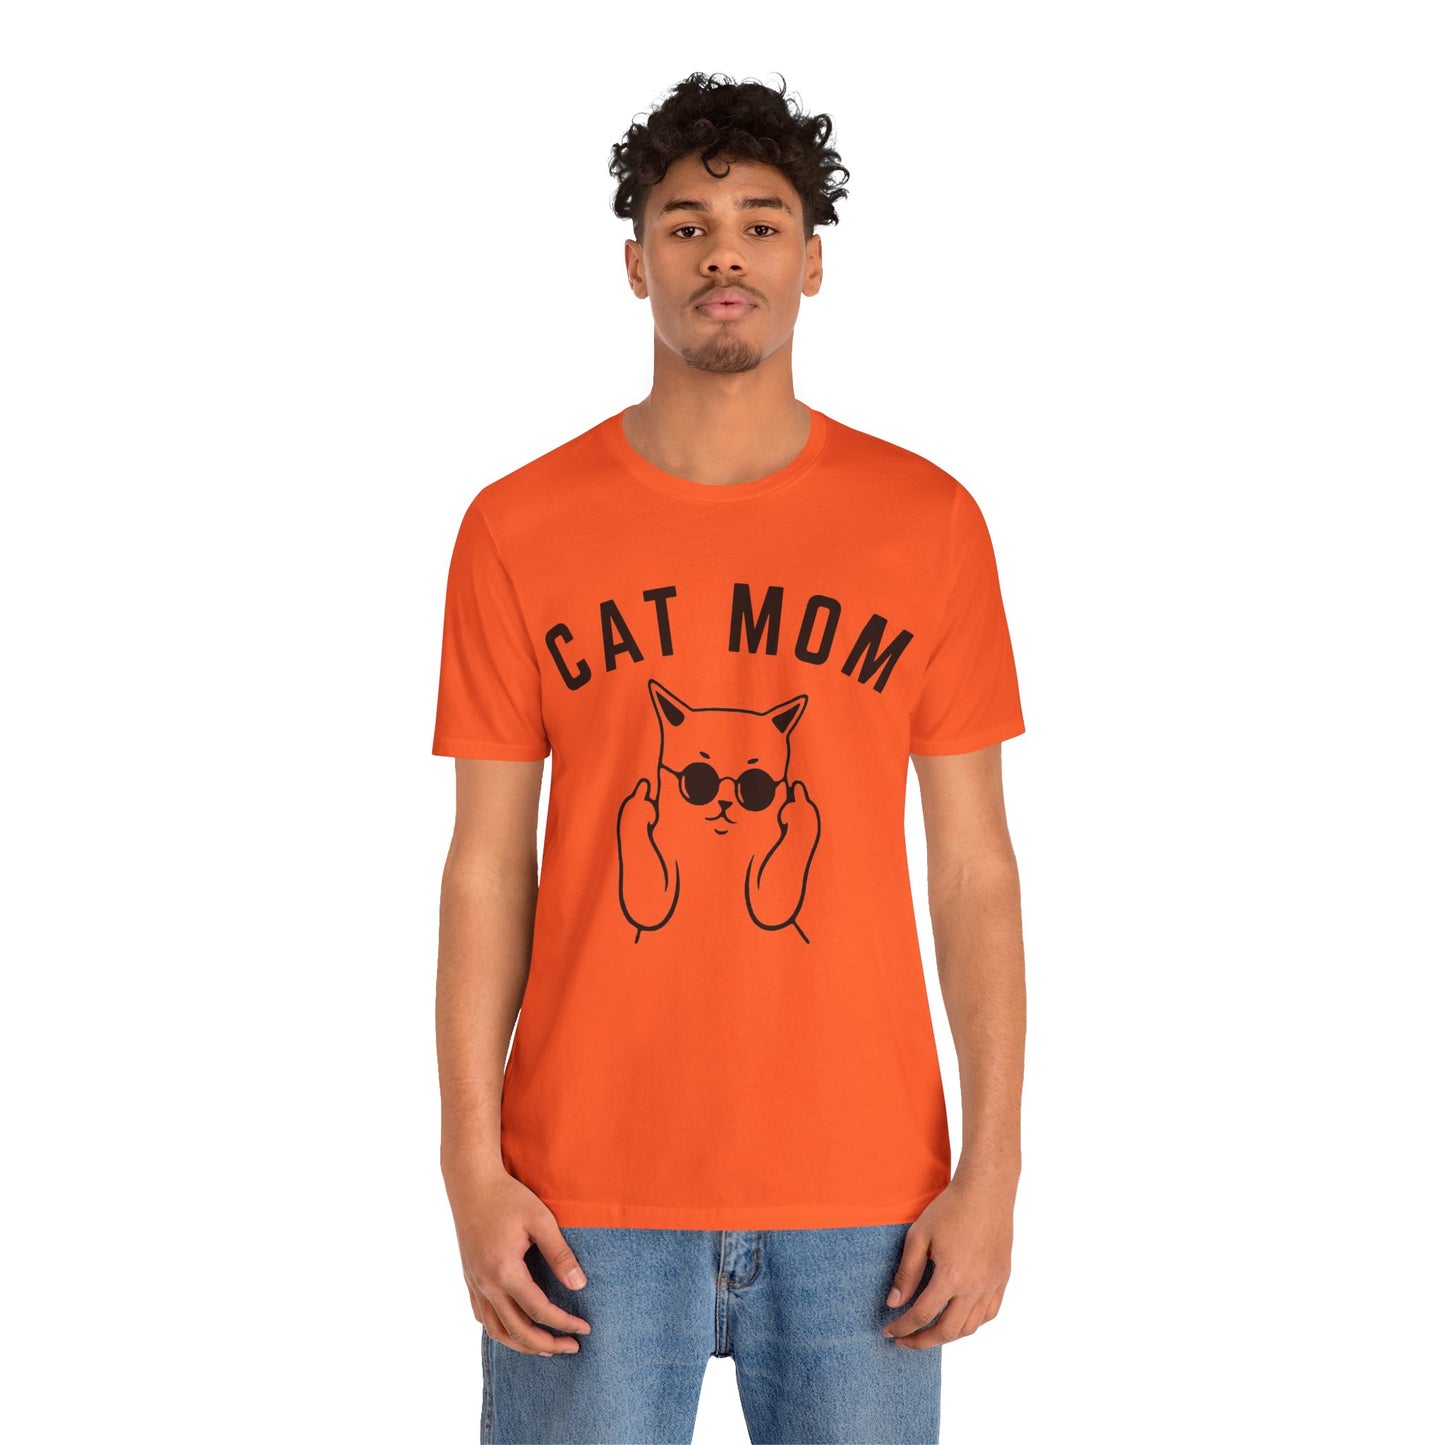 Cat Mom Shirt, Funny Pet Lover Tshirt for Her, Cat Mama T Shirt for Mom Gift from Kids, Cat T-Shirt Gift for Women, Cat Lover Tee, T1111